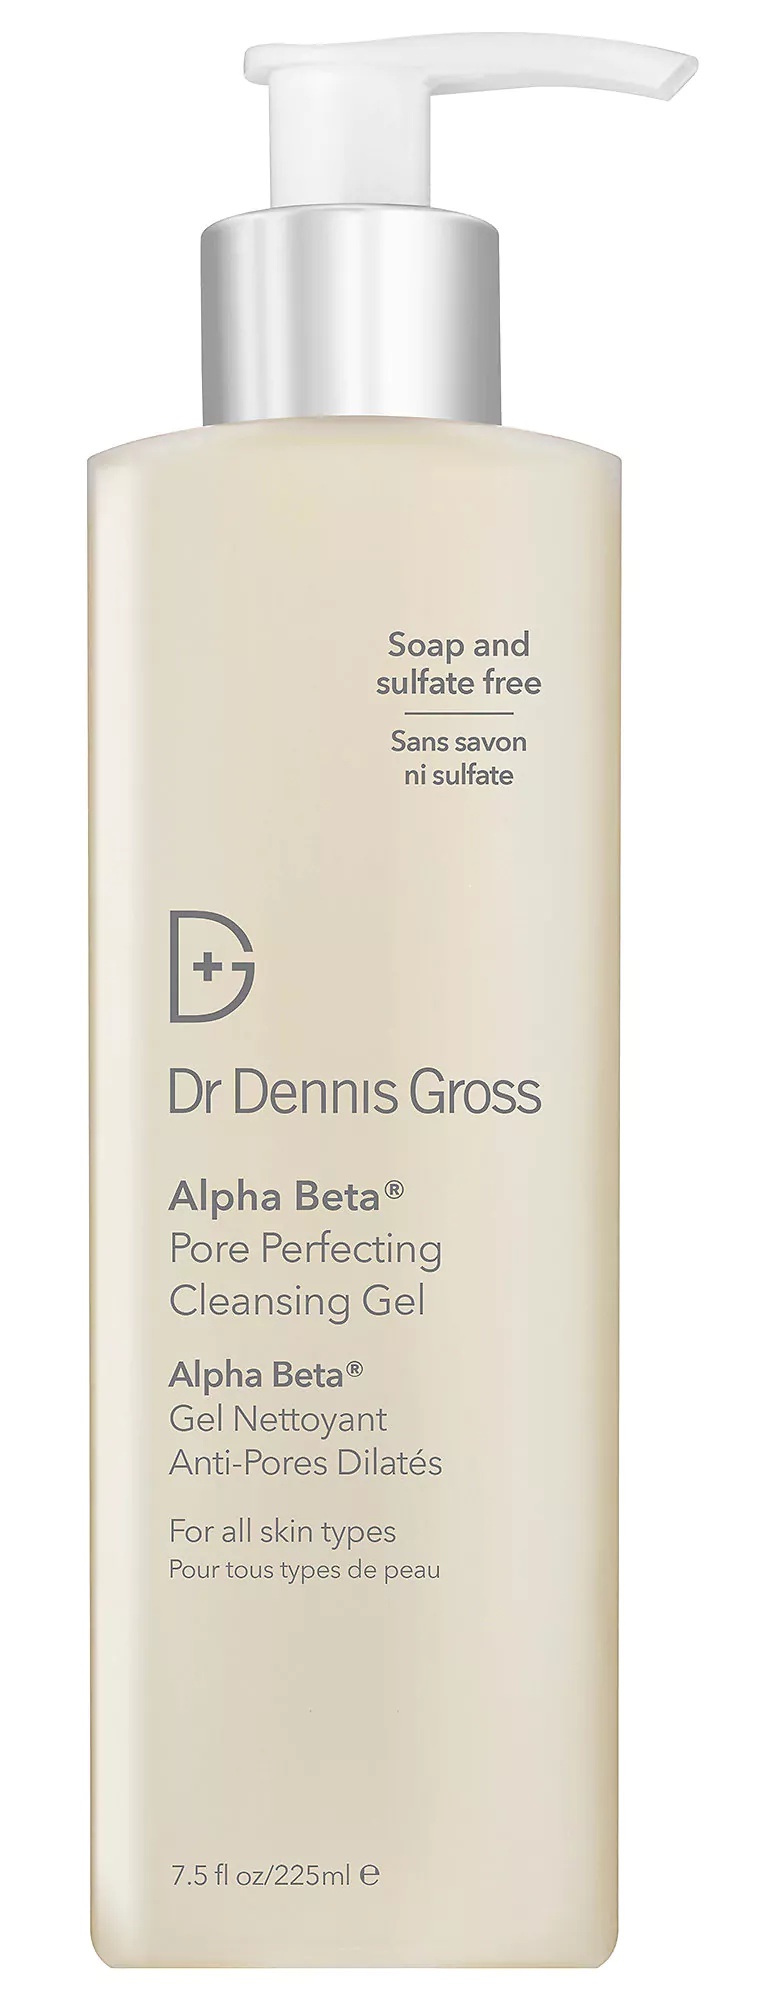 Dr Dennis Gross Alpha Beta Pore Perfecting Cleansing Gel